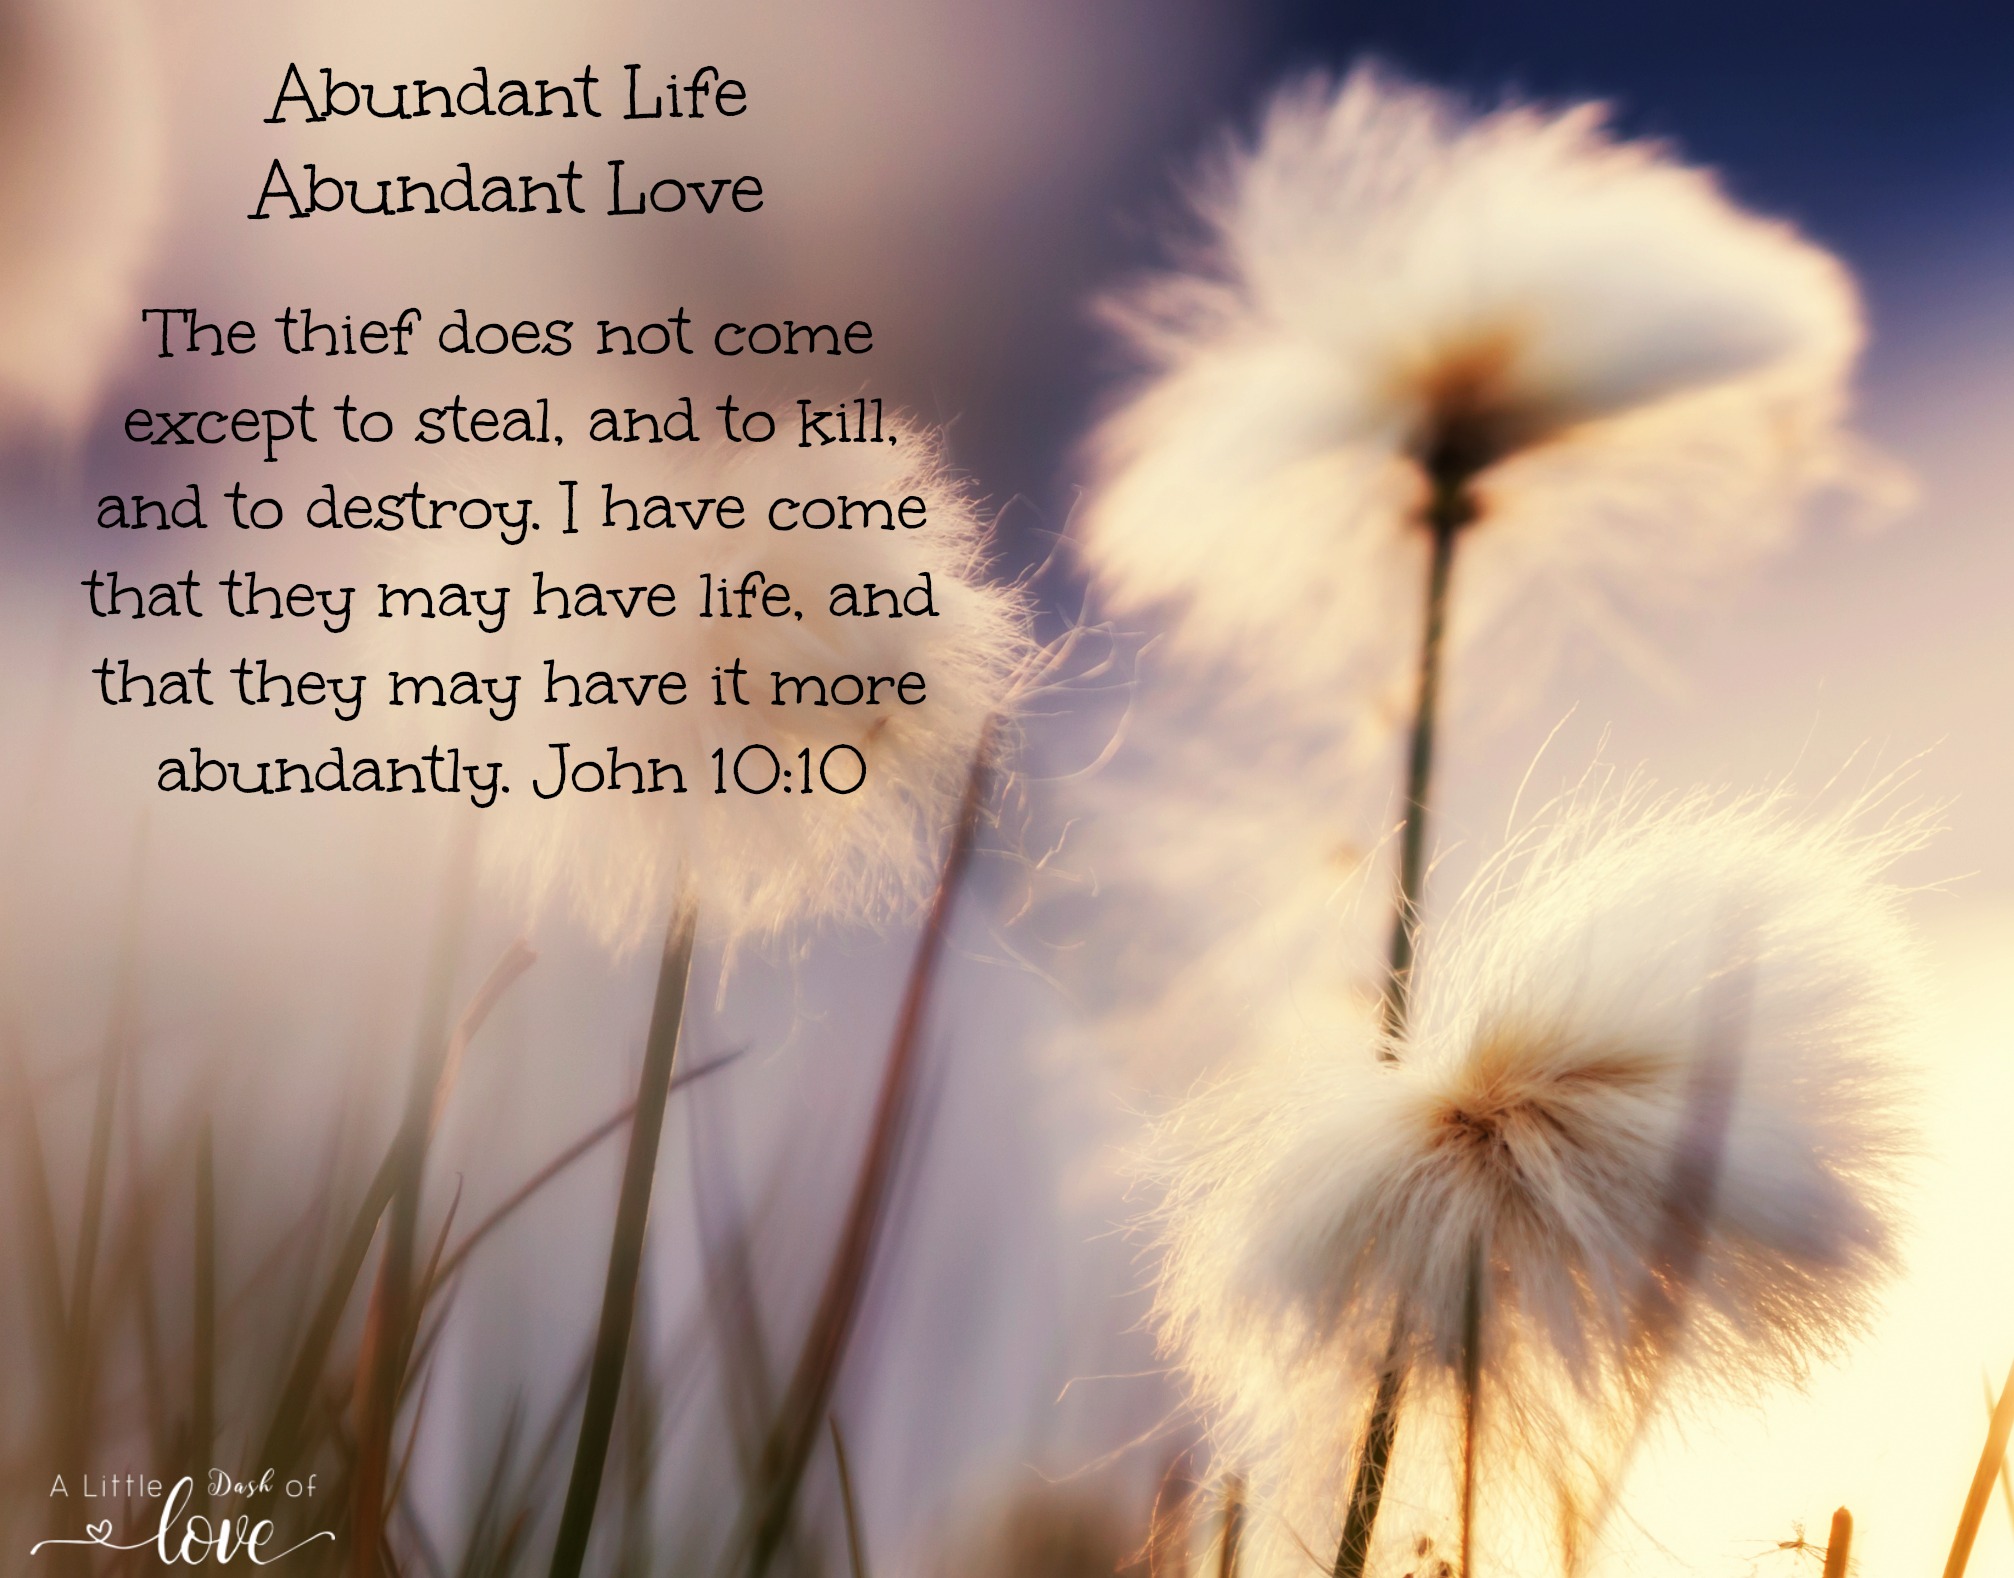 Abundant Life www.alittledashoflove.com